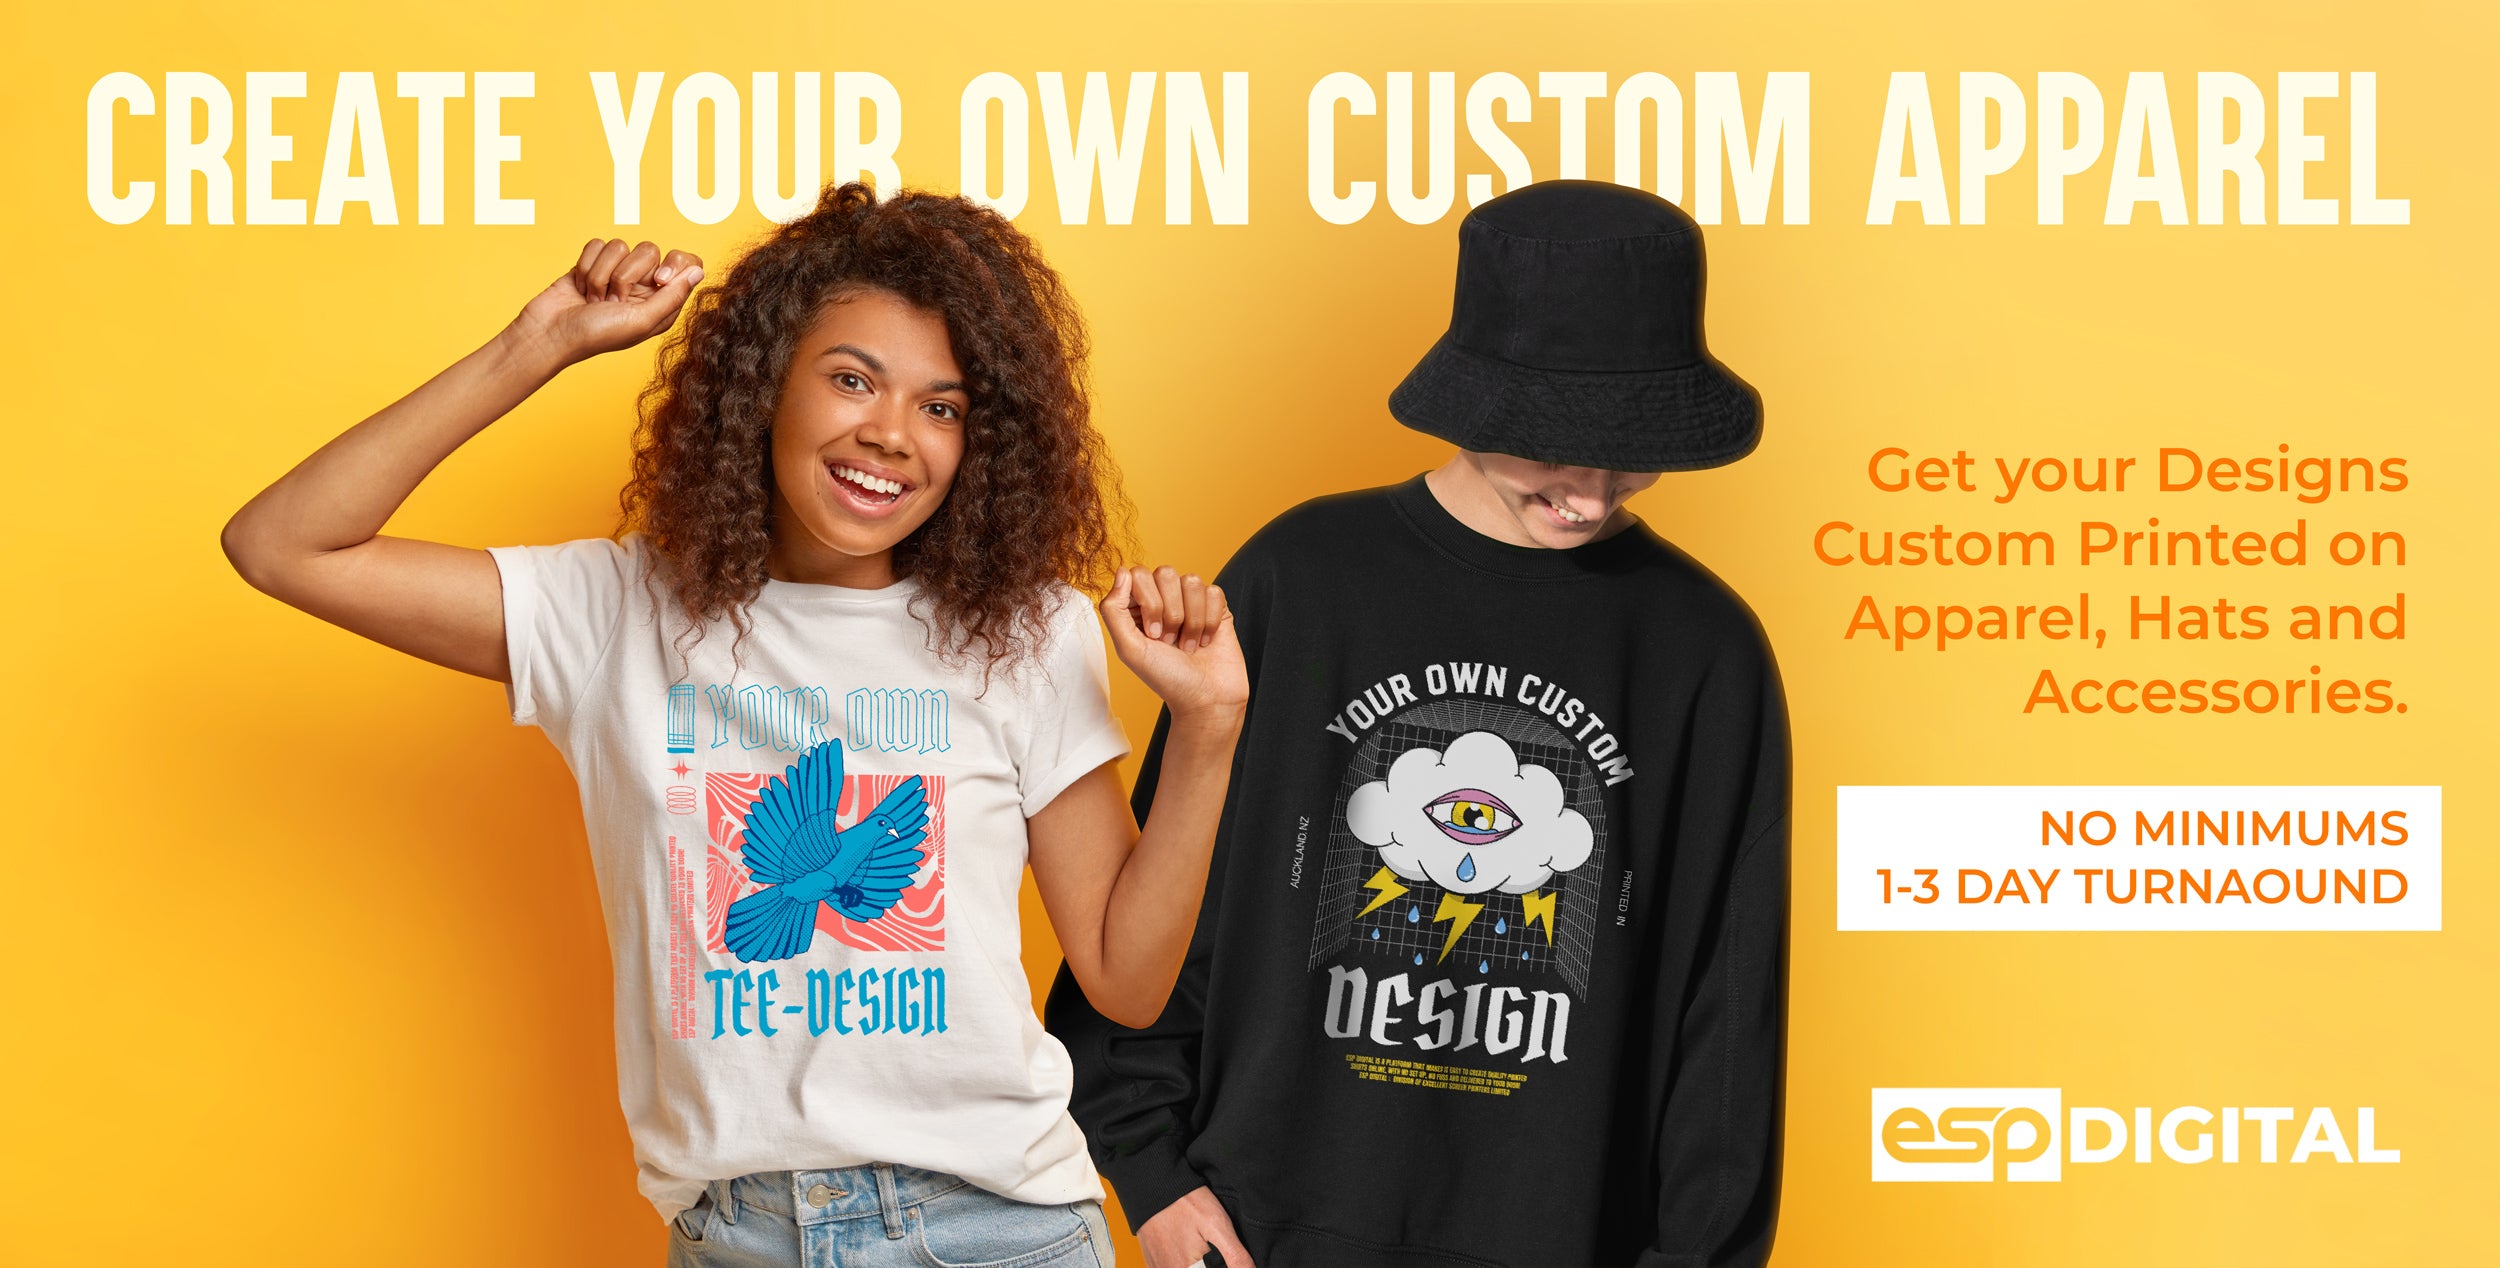 Create your own custom apparel with ESP Digital